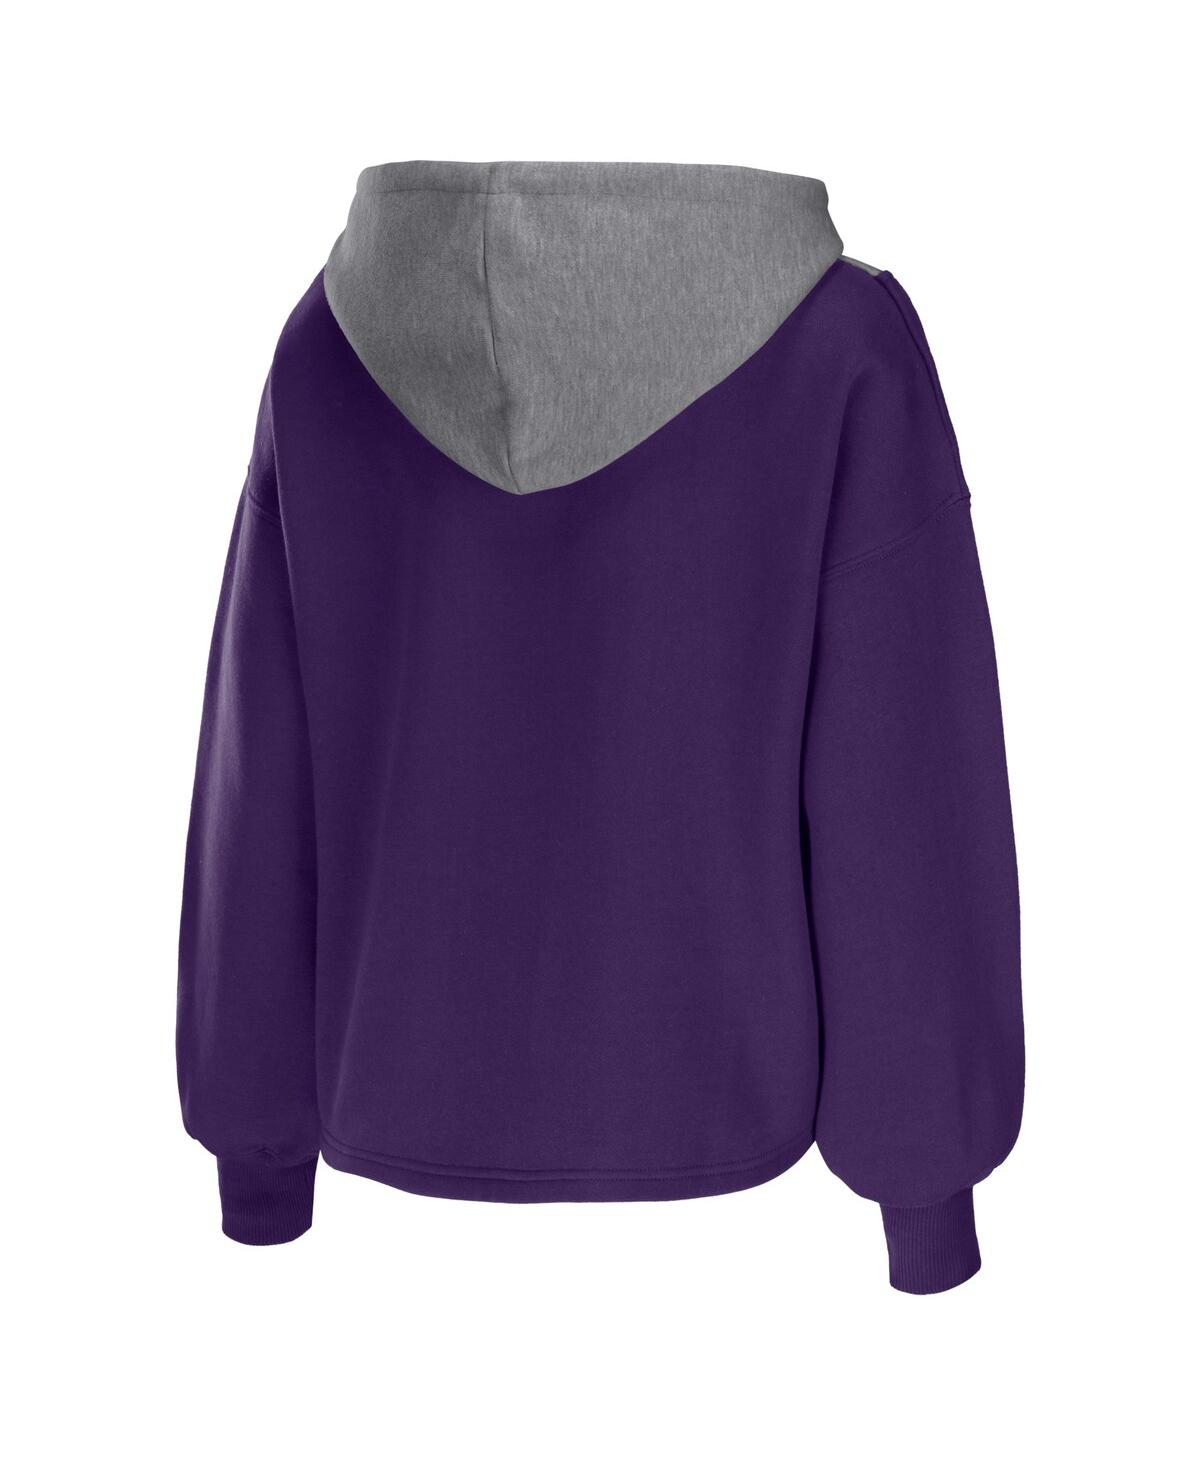 Shop Wear By Erin Andrews Women's  Purple Phoenix Suns Pieced Quarter-zip Hoodie Jacket